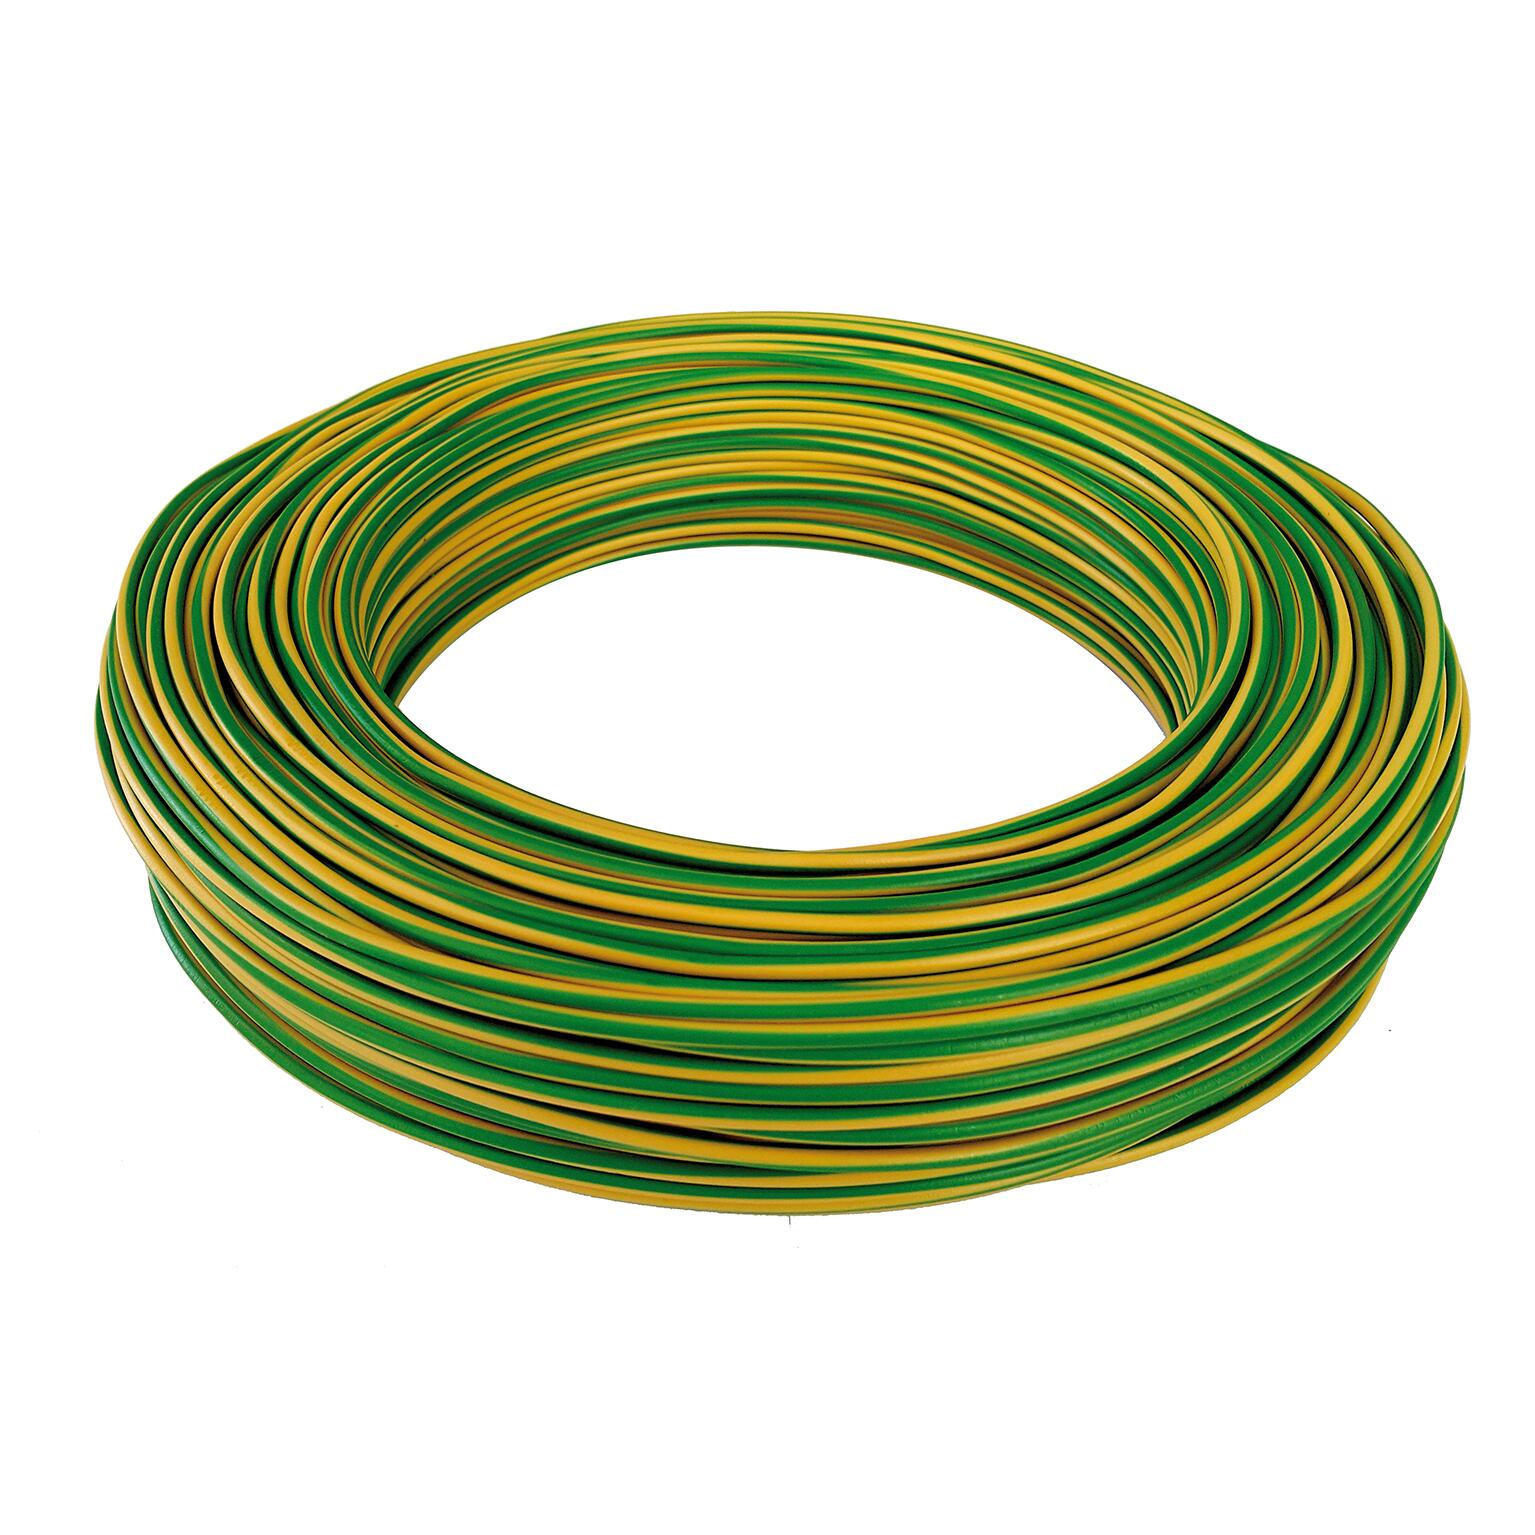 Cavo elettrico giallo/verde FS17 1 x 2,5 mm² 100 m BALDASSARI CAVI Matassa - 1